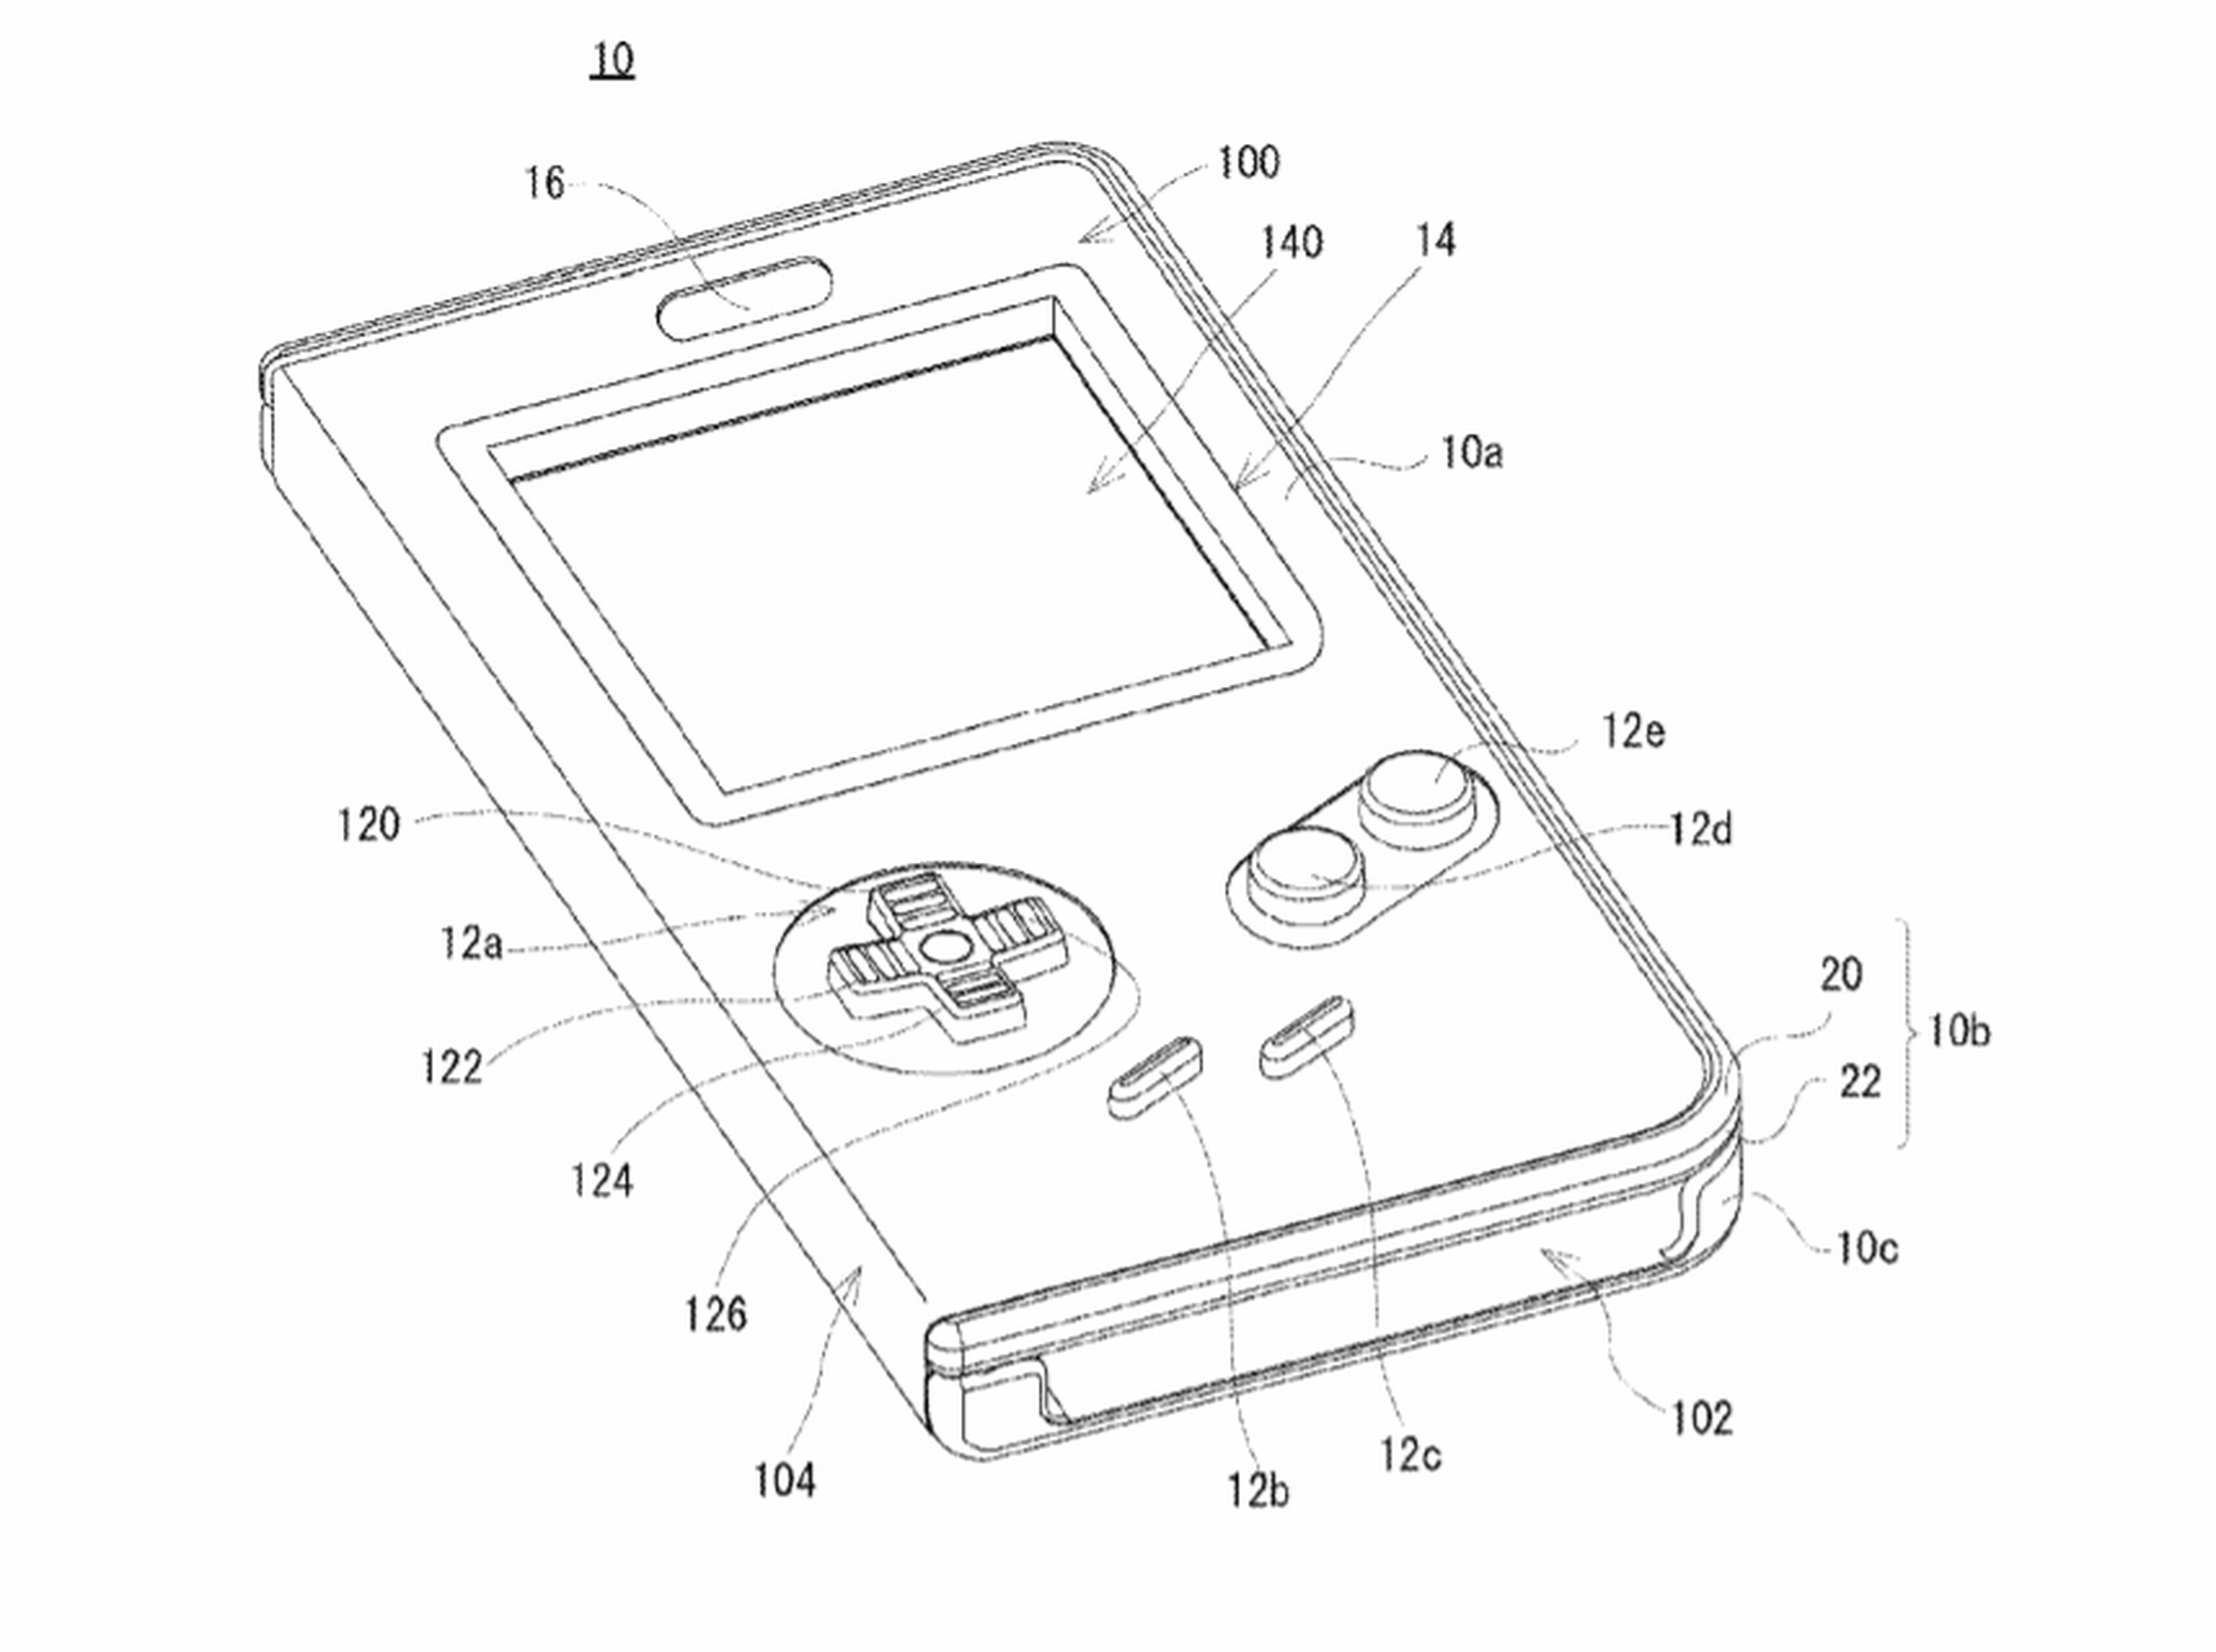 Patente Game Boy